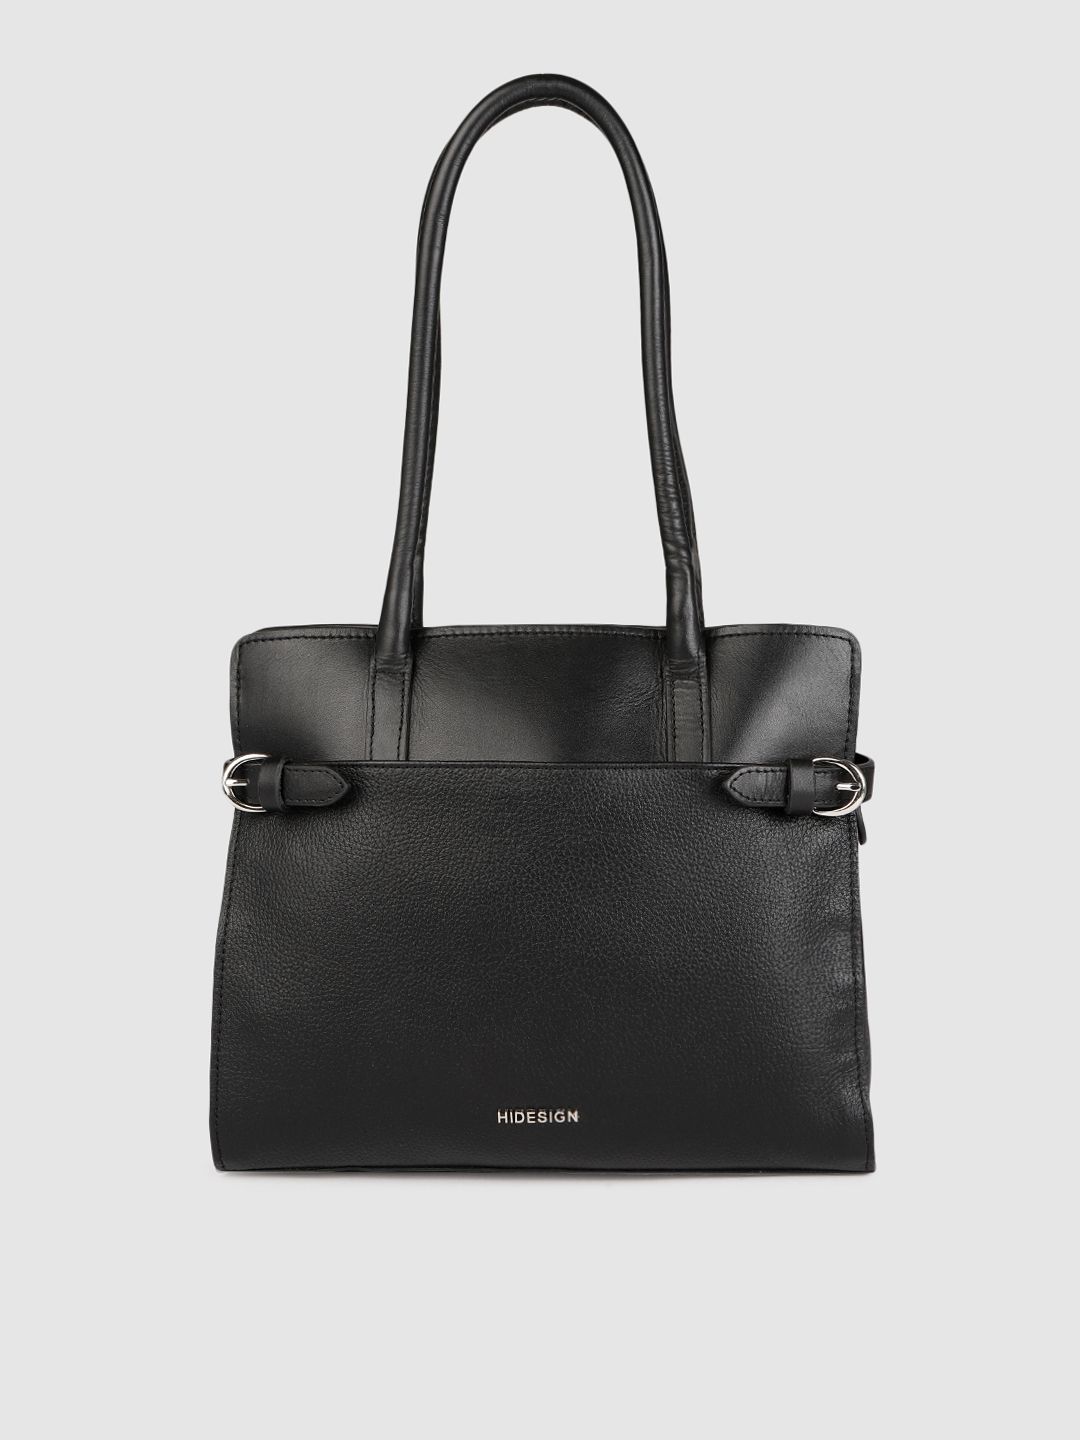 Hidesign Black Leather Structured Shoulder Bag Price in India